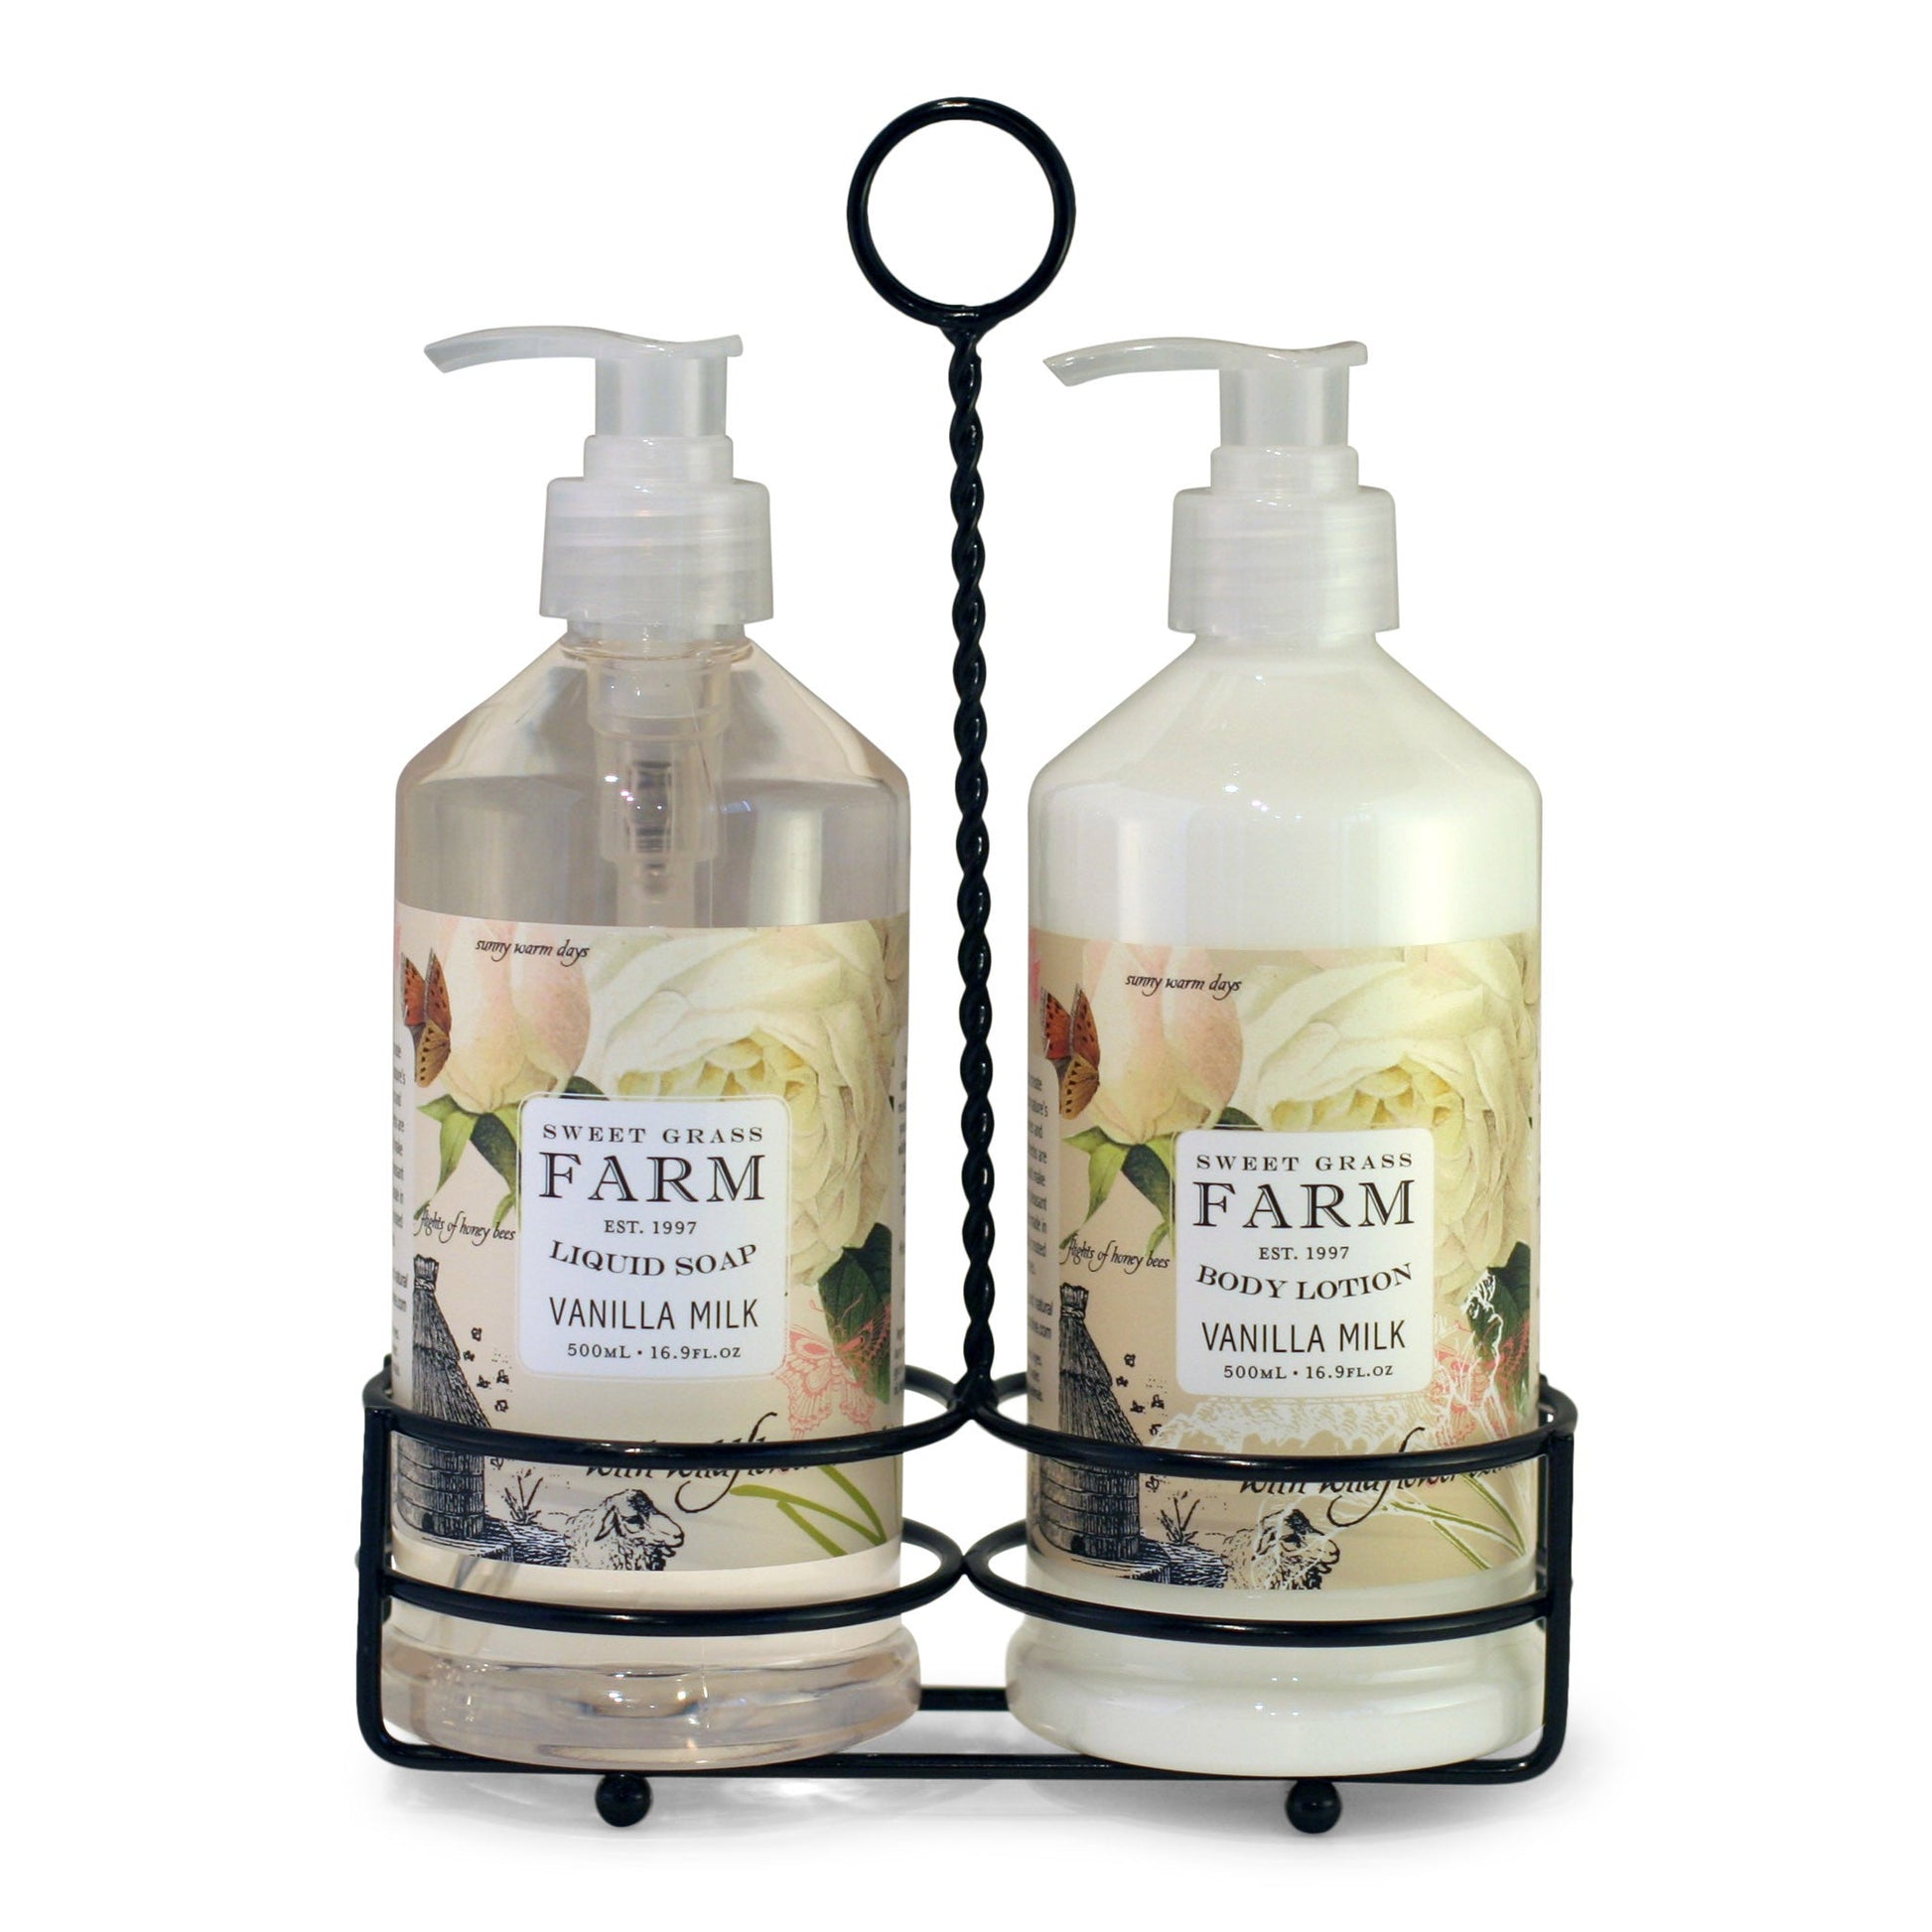 Sweet Grass Farm: Body Lotion & Liquid Soap Caddy Set